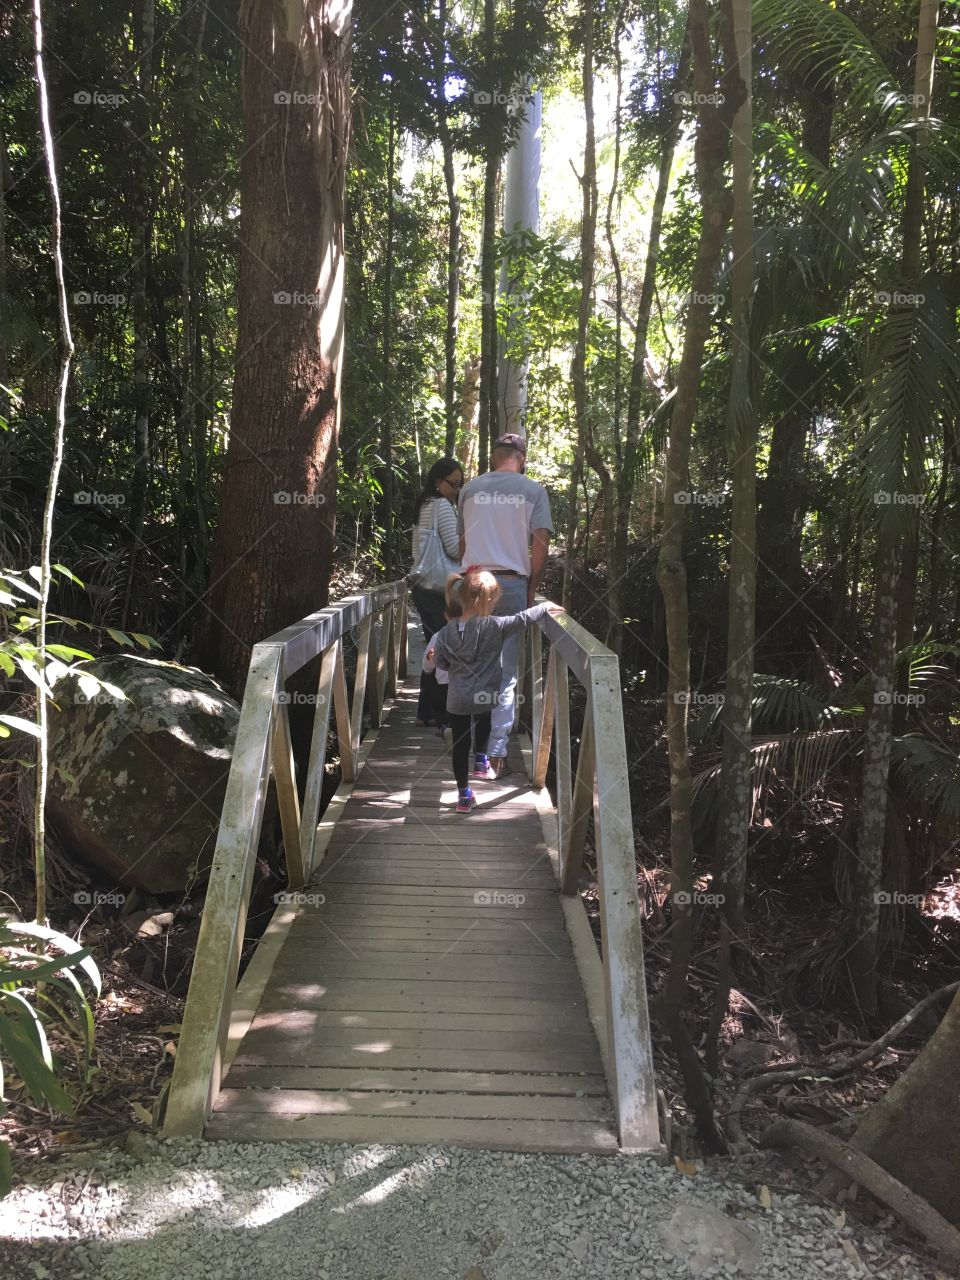 Walking in the rainforest 